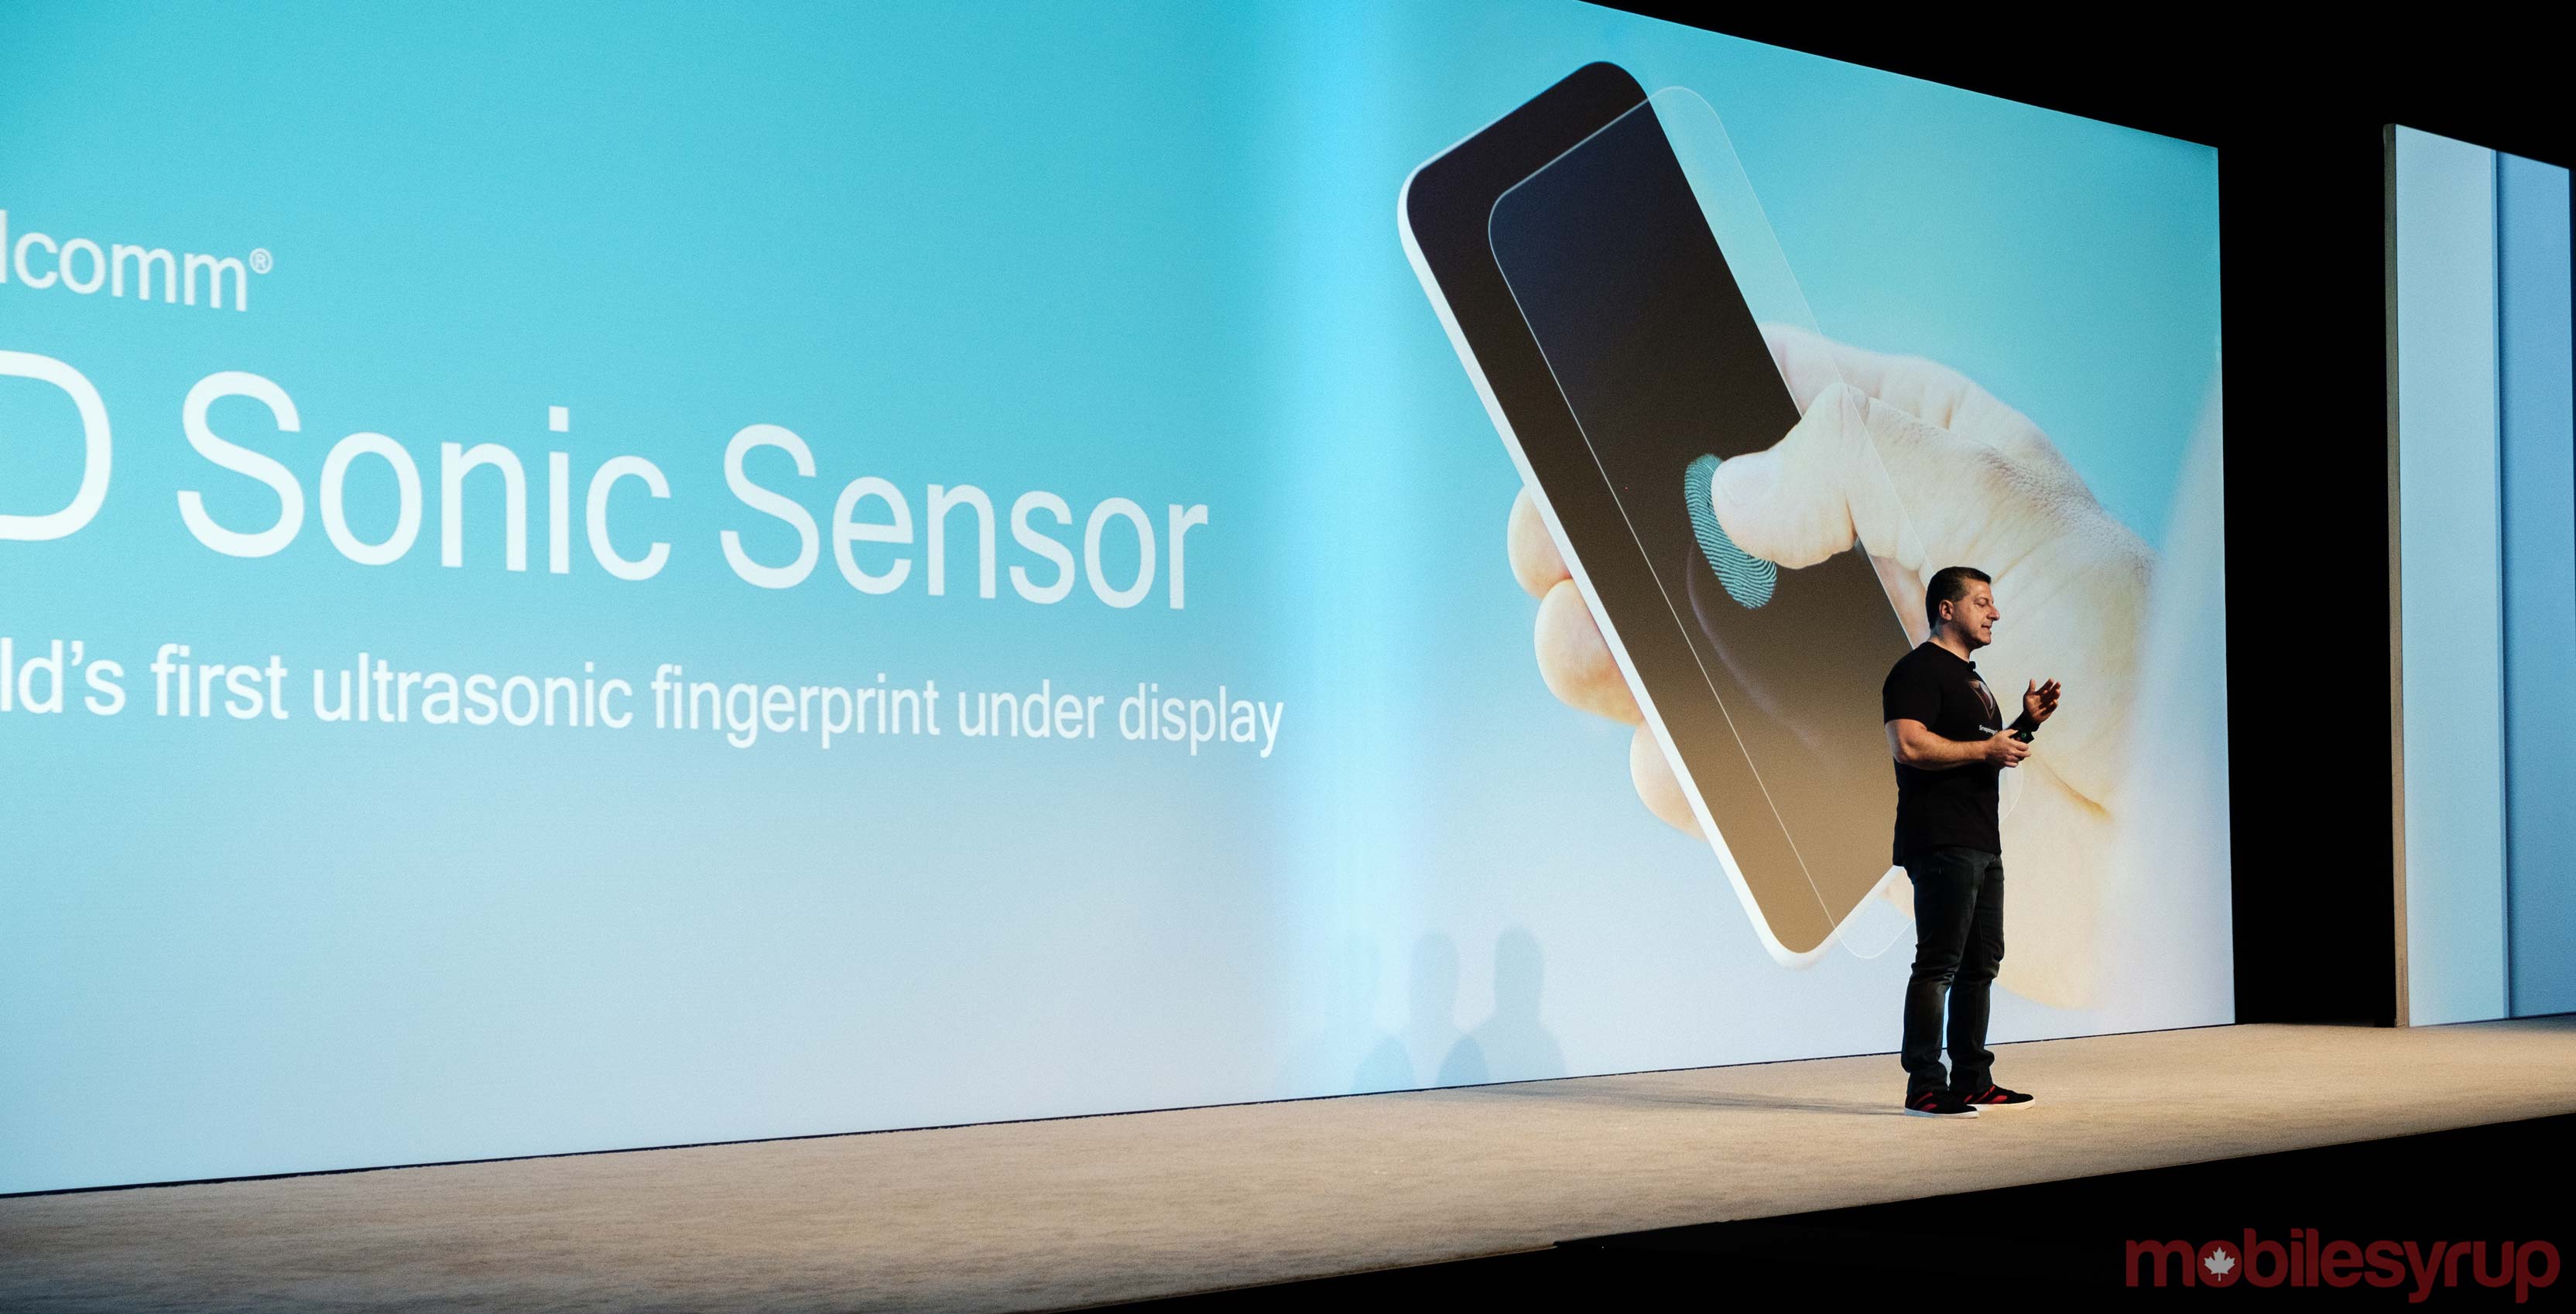 Qualcomm debuts world’s first 3D Ultrasonic in-display fingerprint sensor